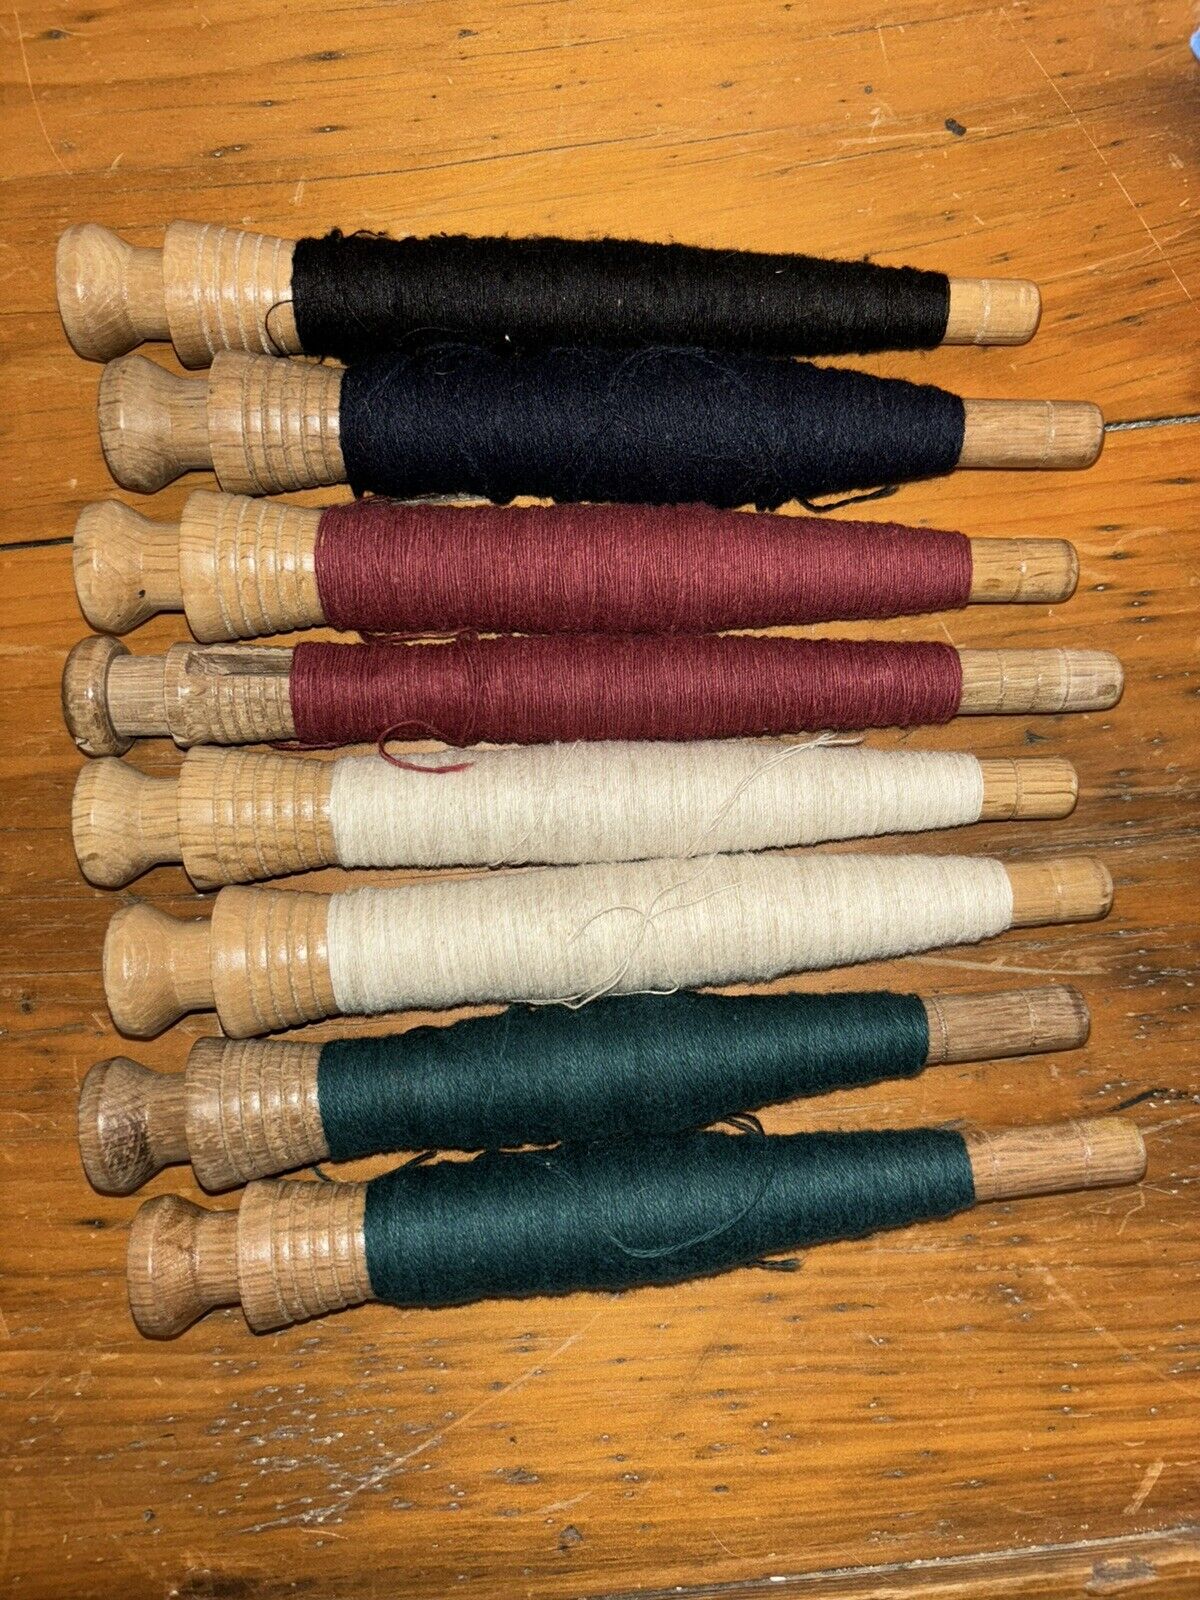 8 Vintage Wooden Spools Textile Mill Thread Bobbins Spindles Lot 8